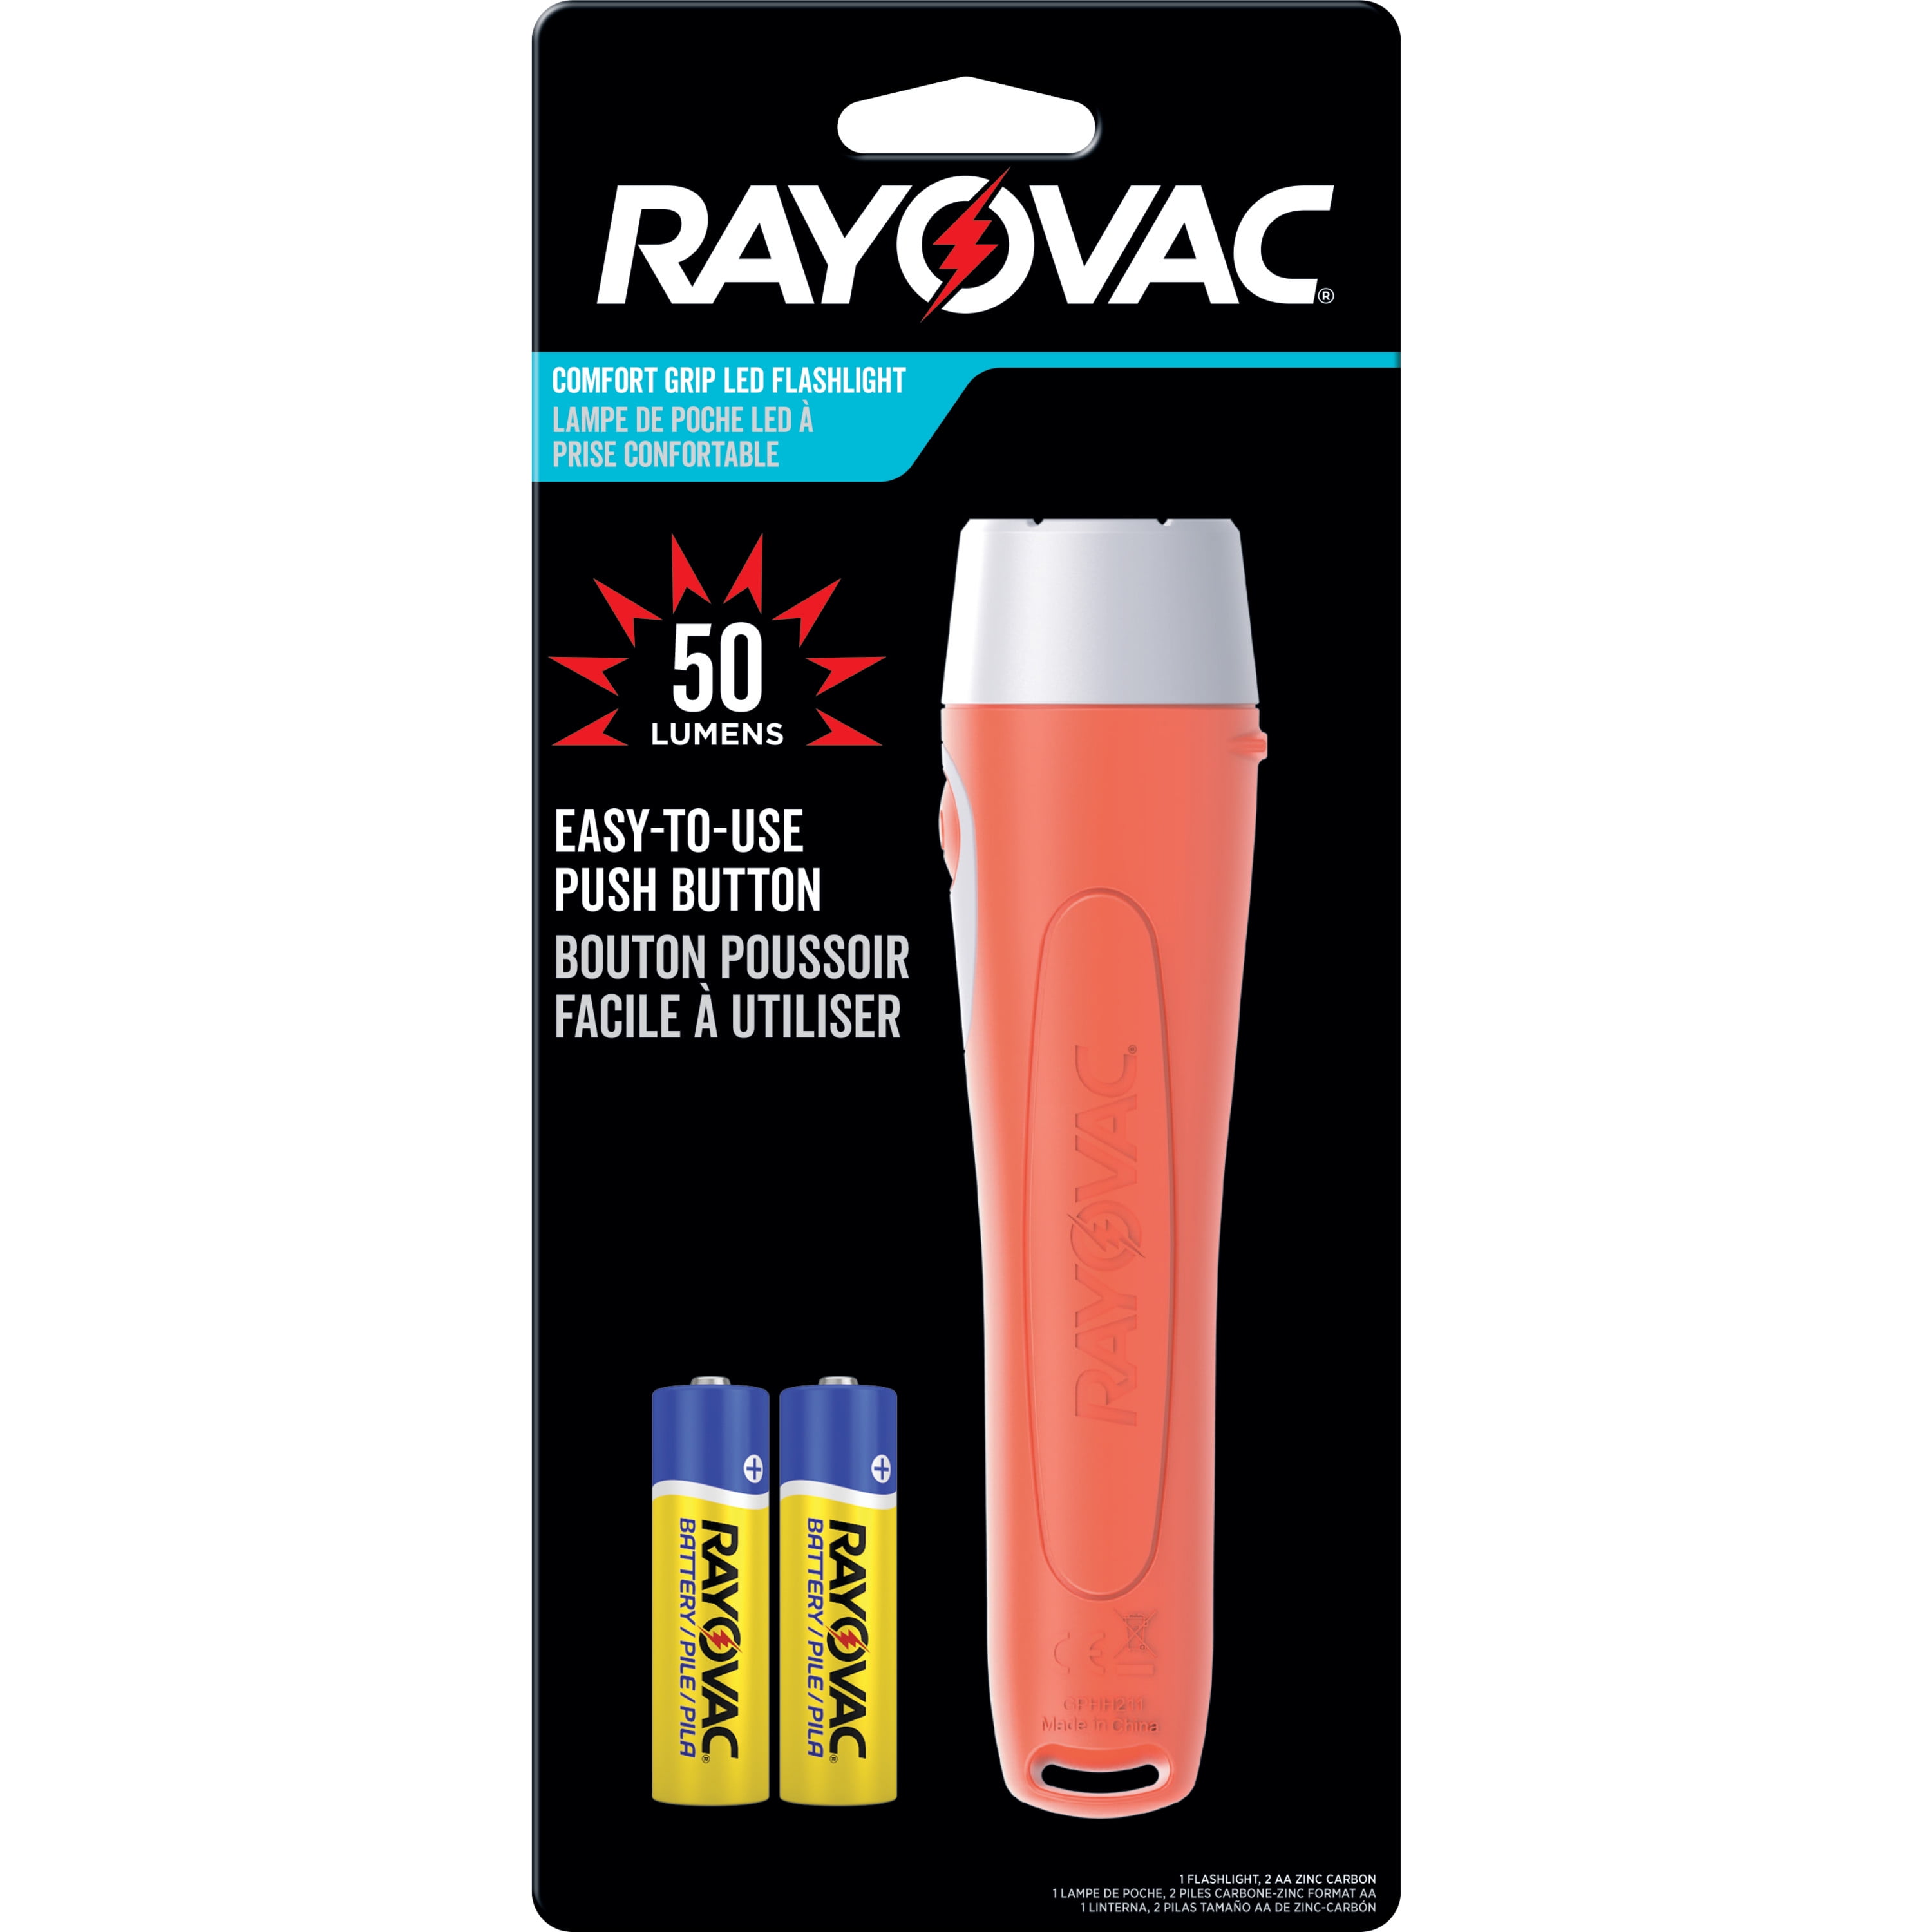 Rayovac LED Flashlight, 50 Lumen, Comfort Grip LED Light